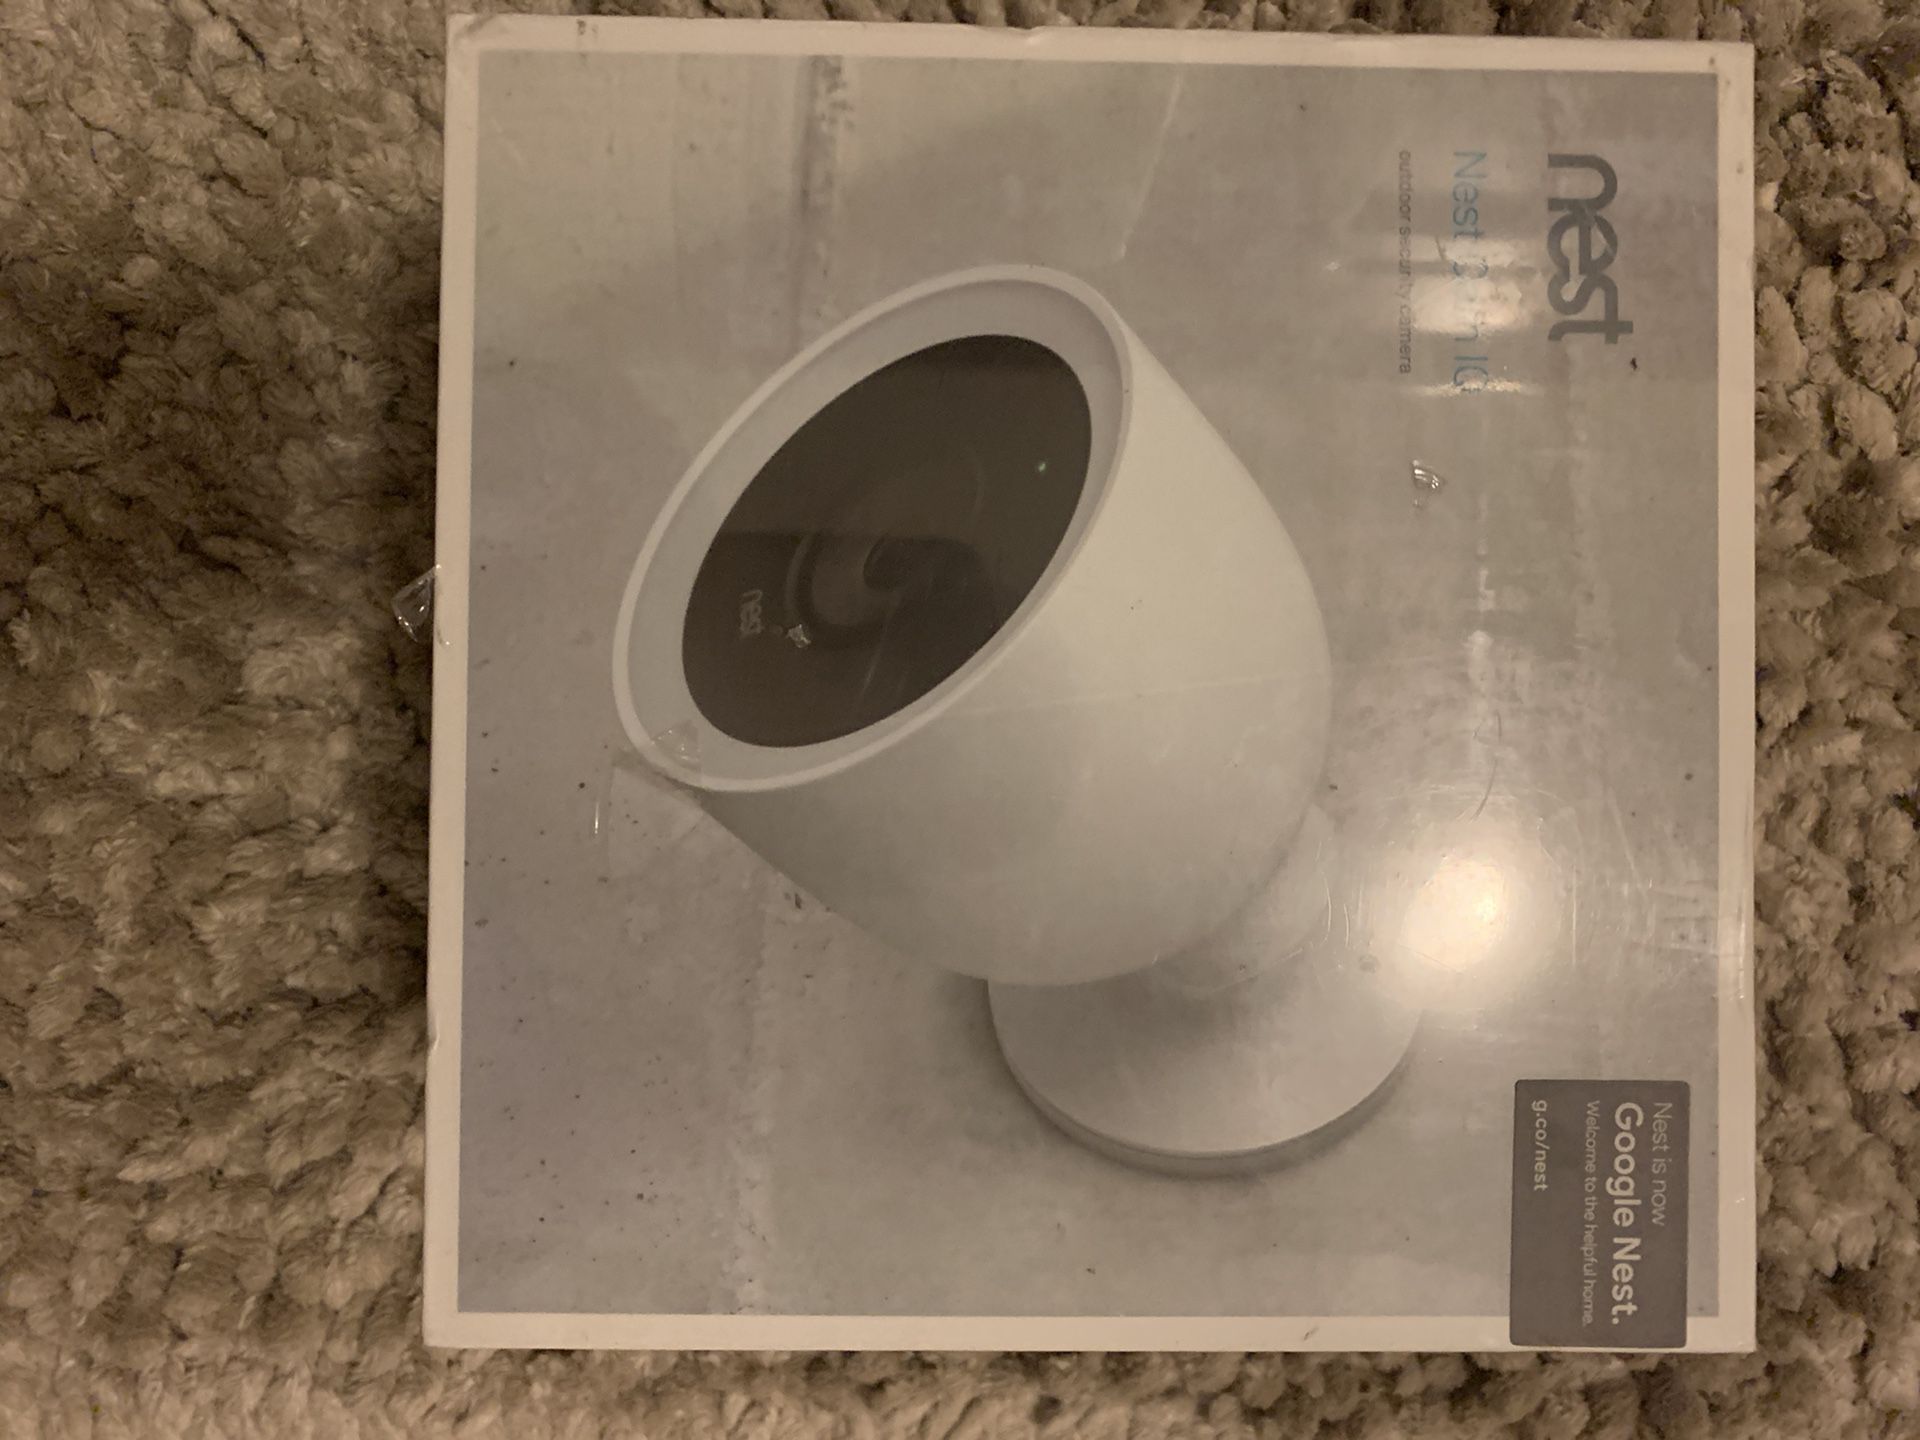 Nest Cam IQ Outdoor Security Camera - White